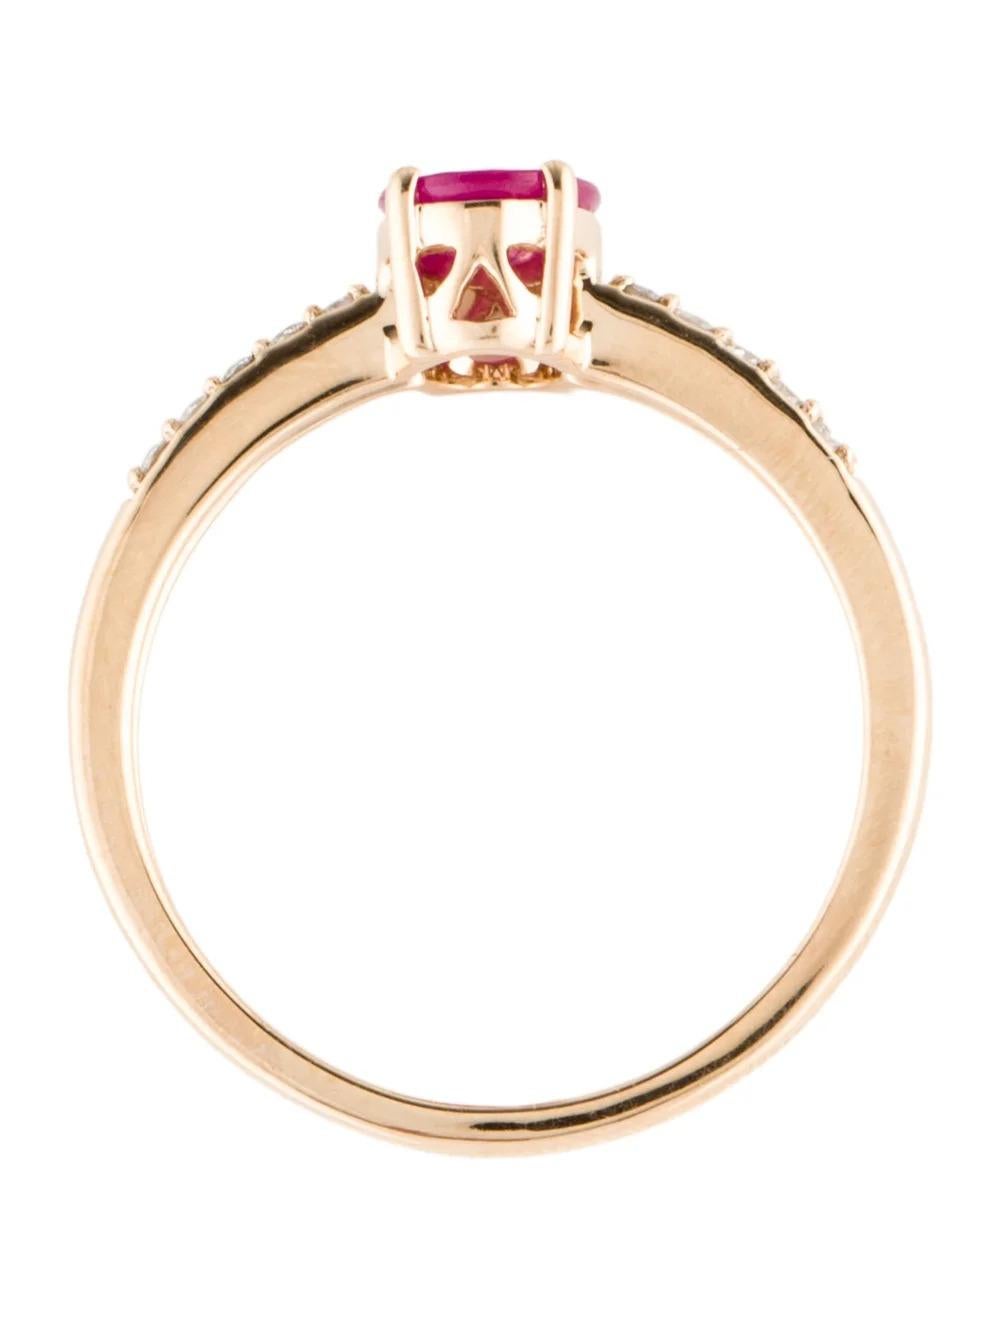 Women's 14K Ruby & Diamond Cocktail Ring - Size 8.75 - Timeless Elegance, Luxury Jewelry For Sale